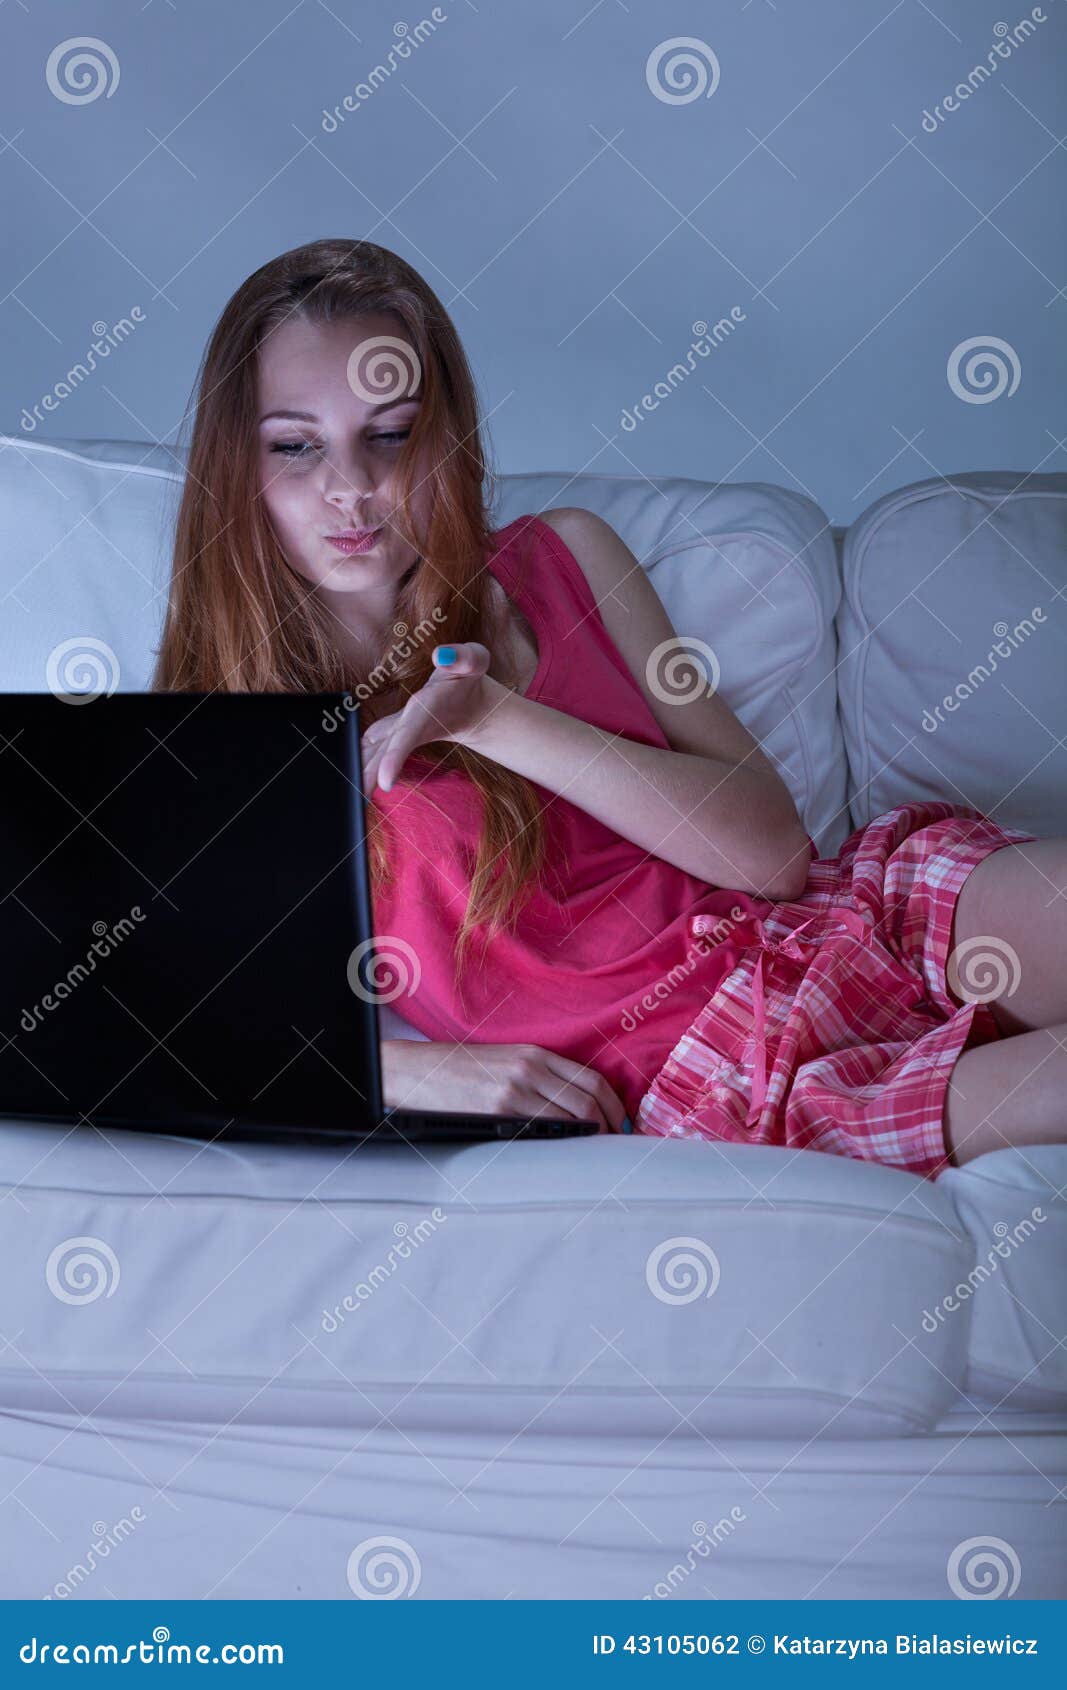 girl talking on skype before sleeping